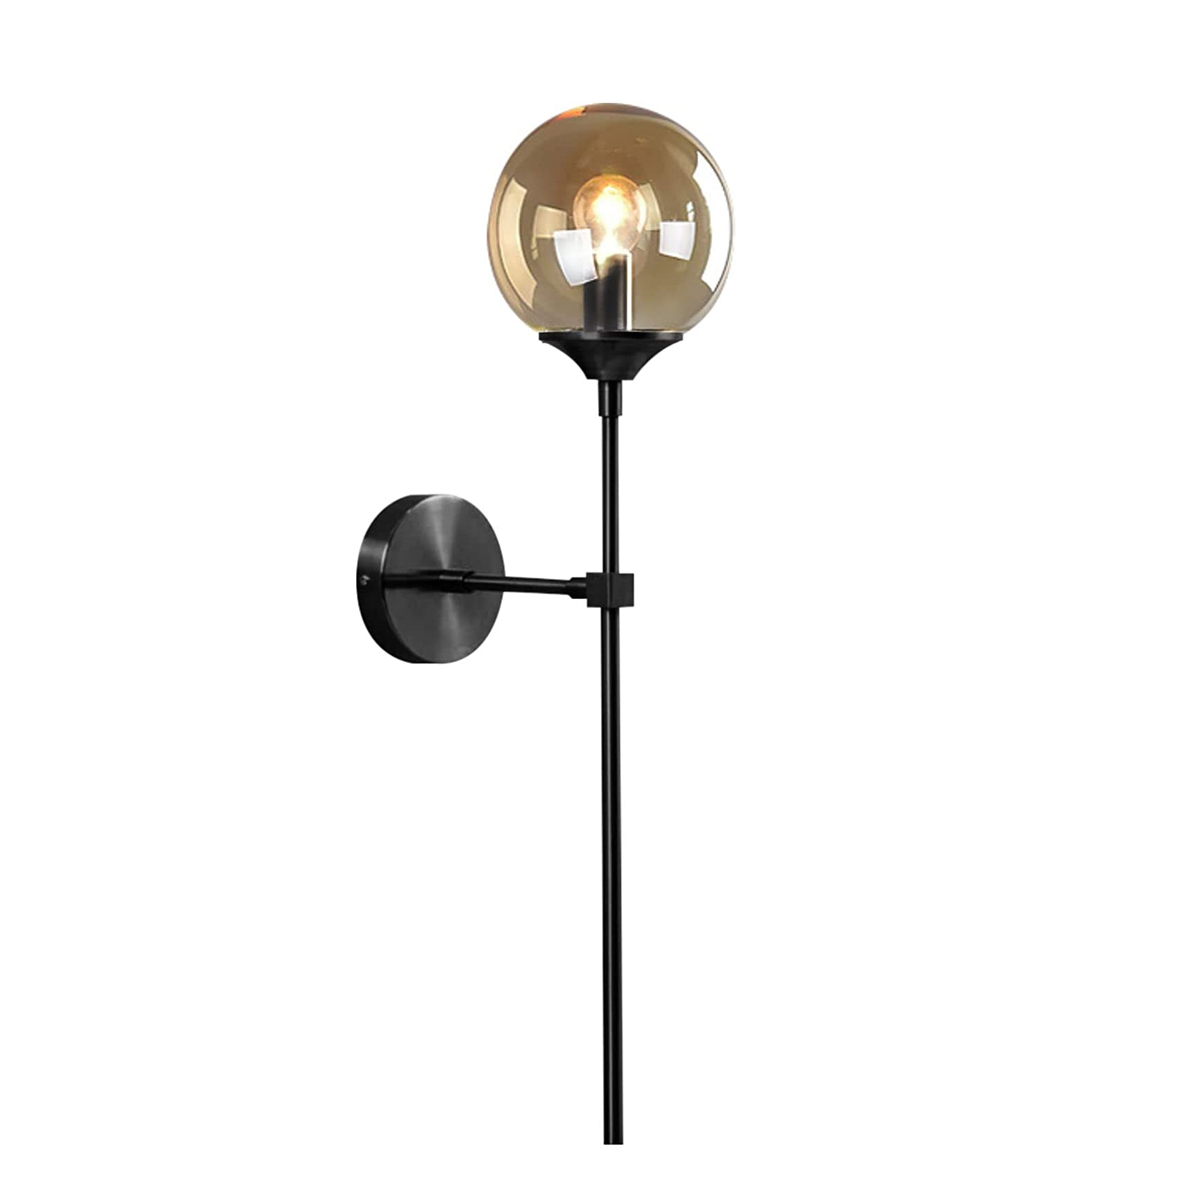 Amber globe wall light with black lamp body